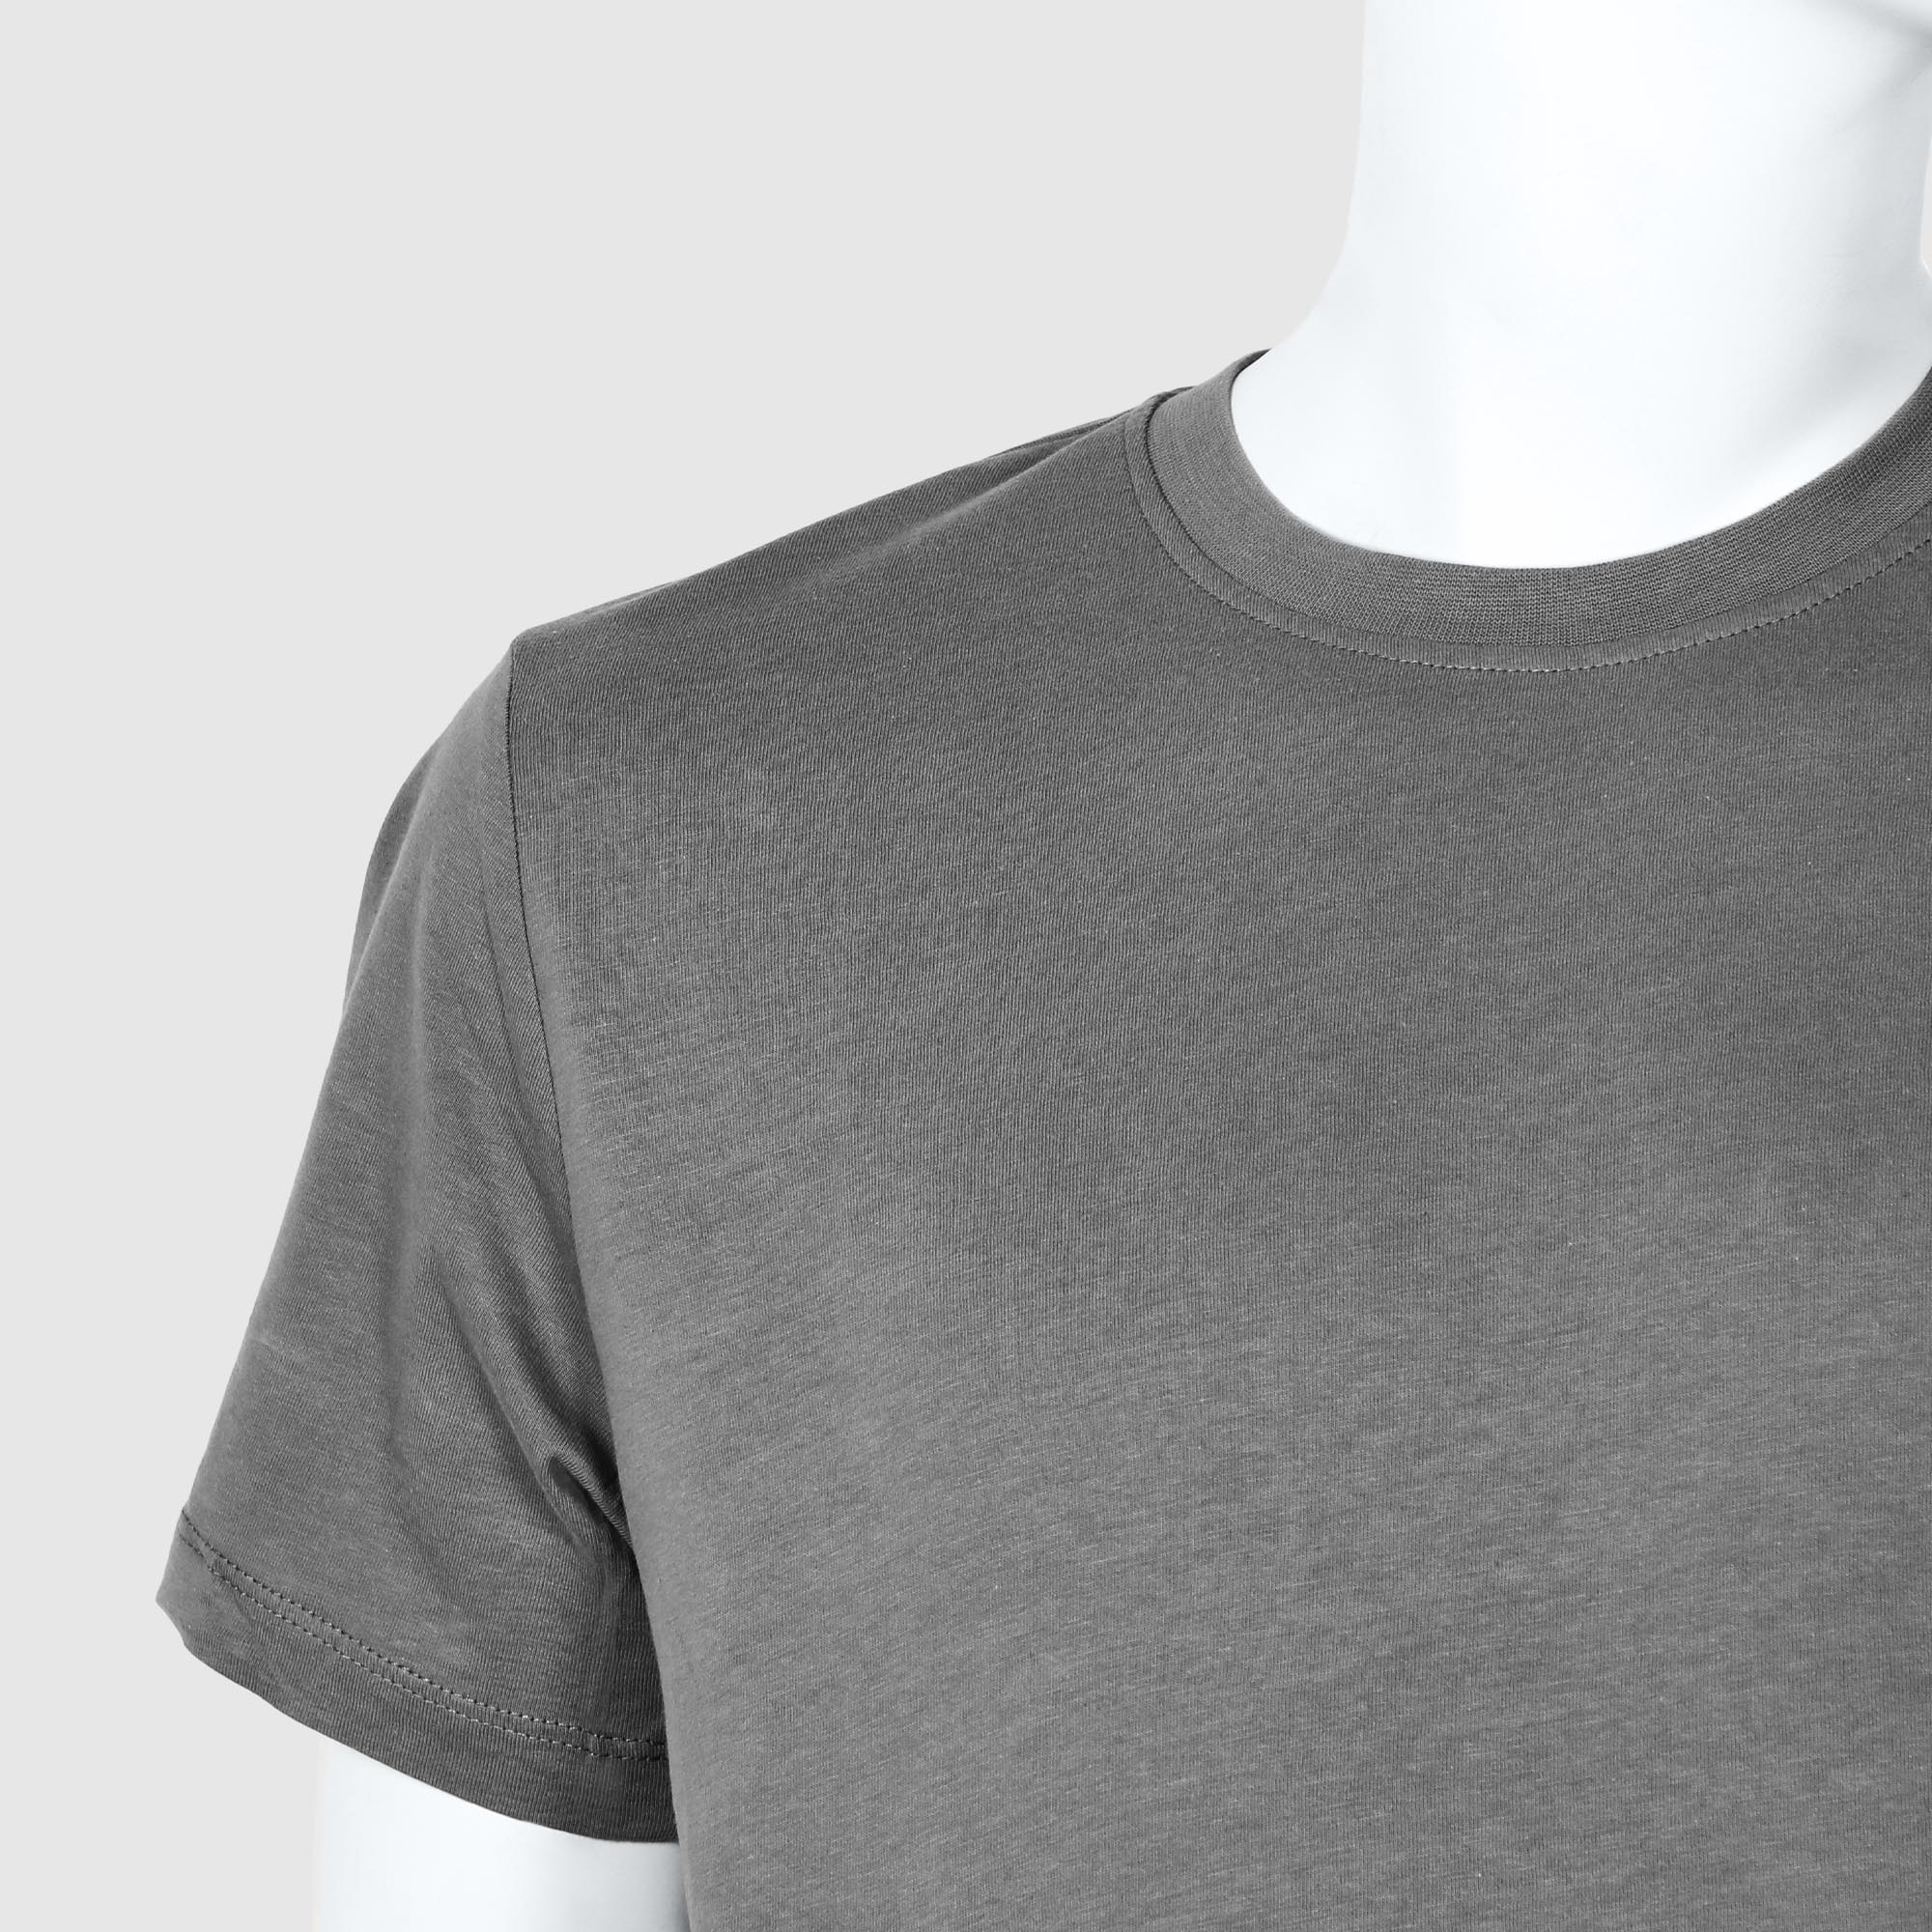 Мужская футболка Diva Teks серая (DTD-04), цвет серый, размер 46-48 - фото 3